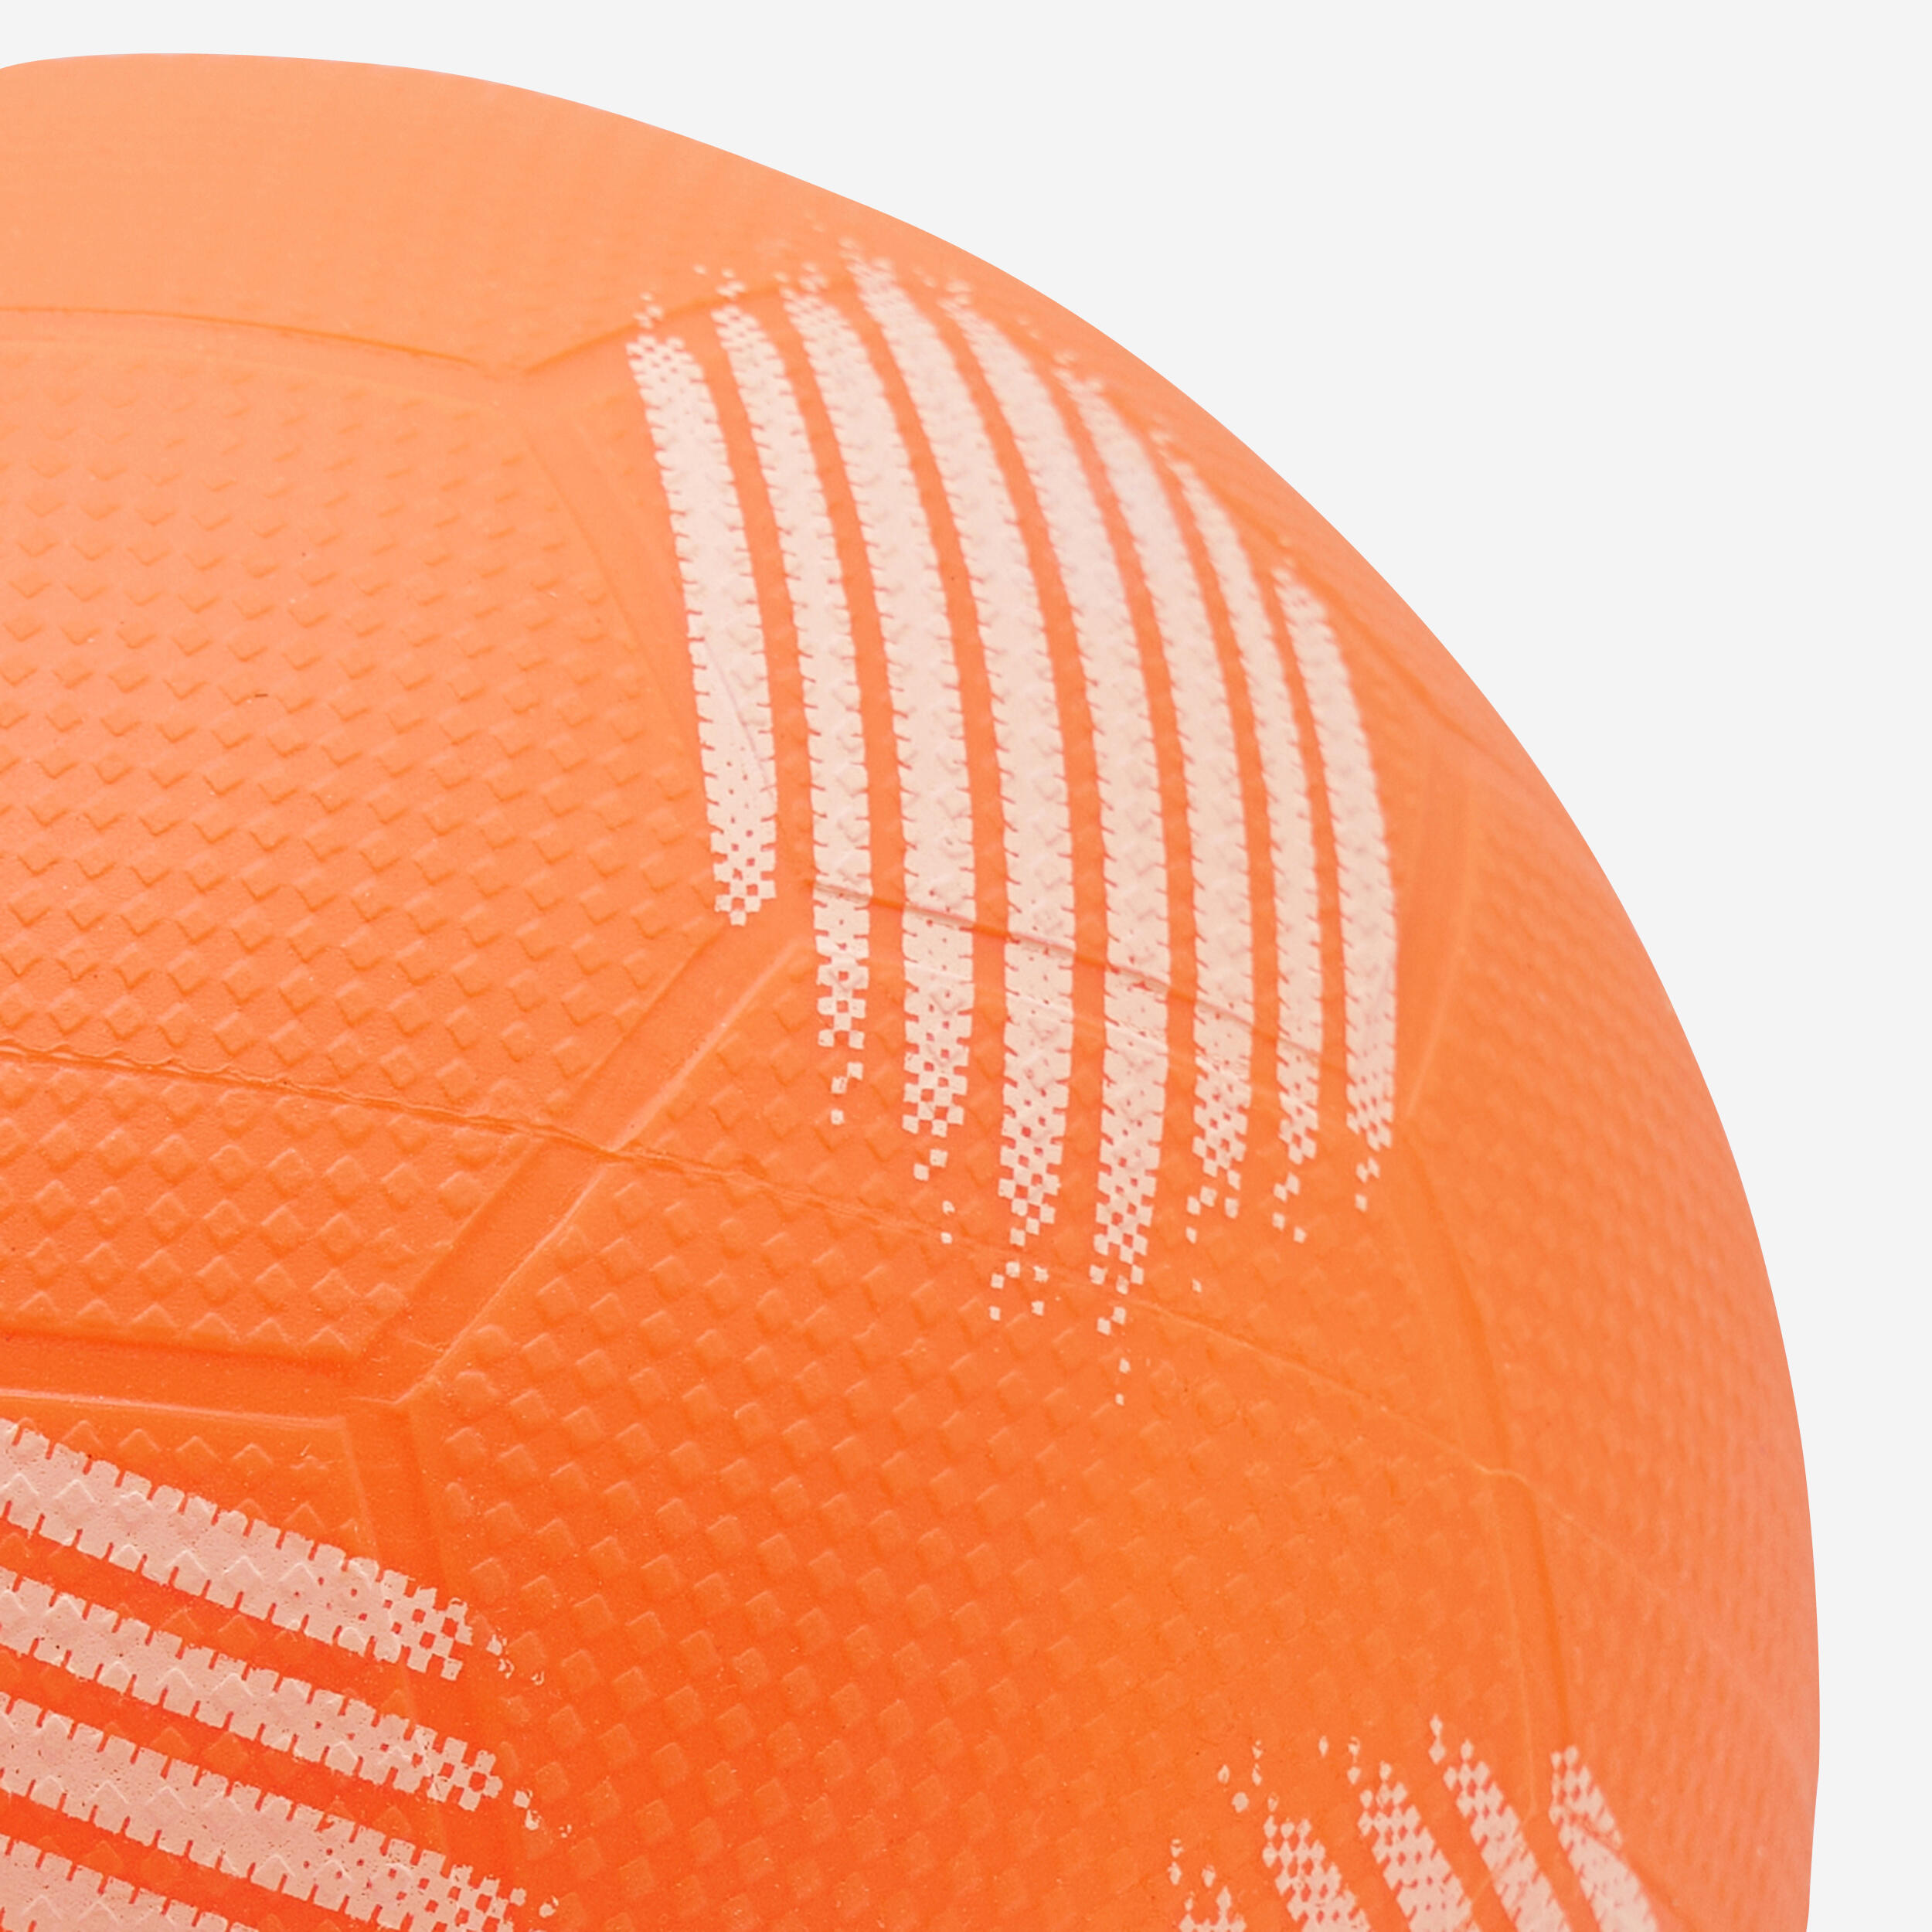 Size 4 Soccer Ball - Sunny 300 Orange - KIPSTA